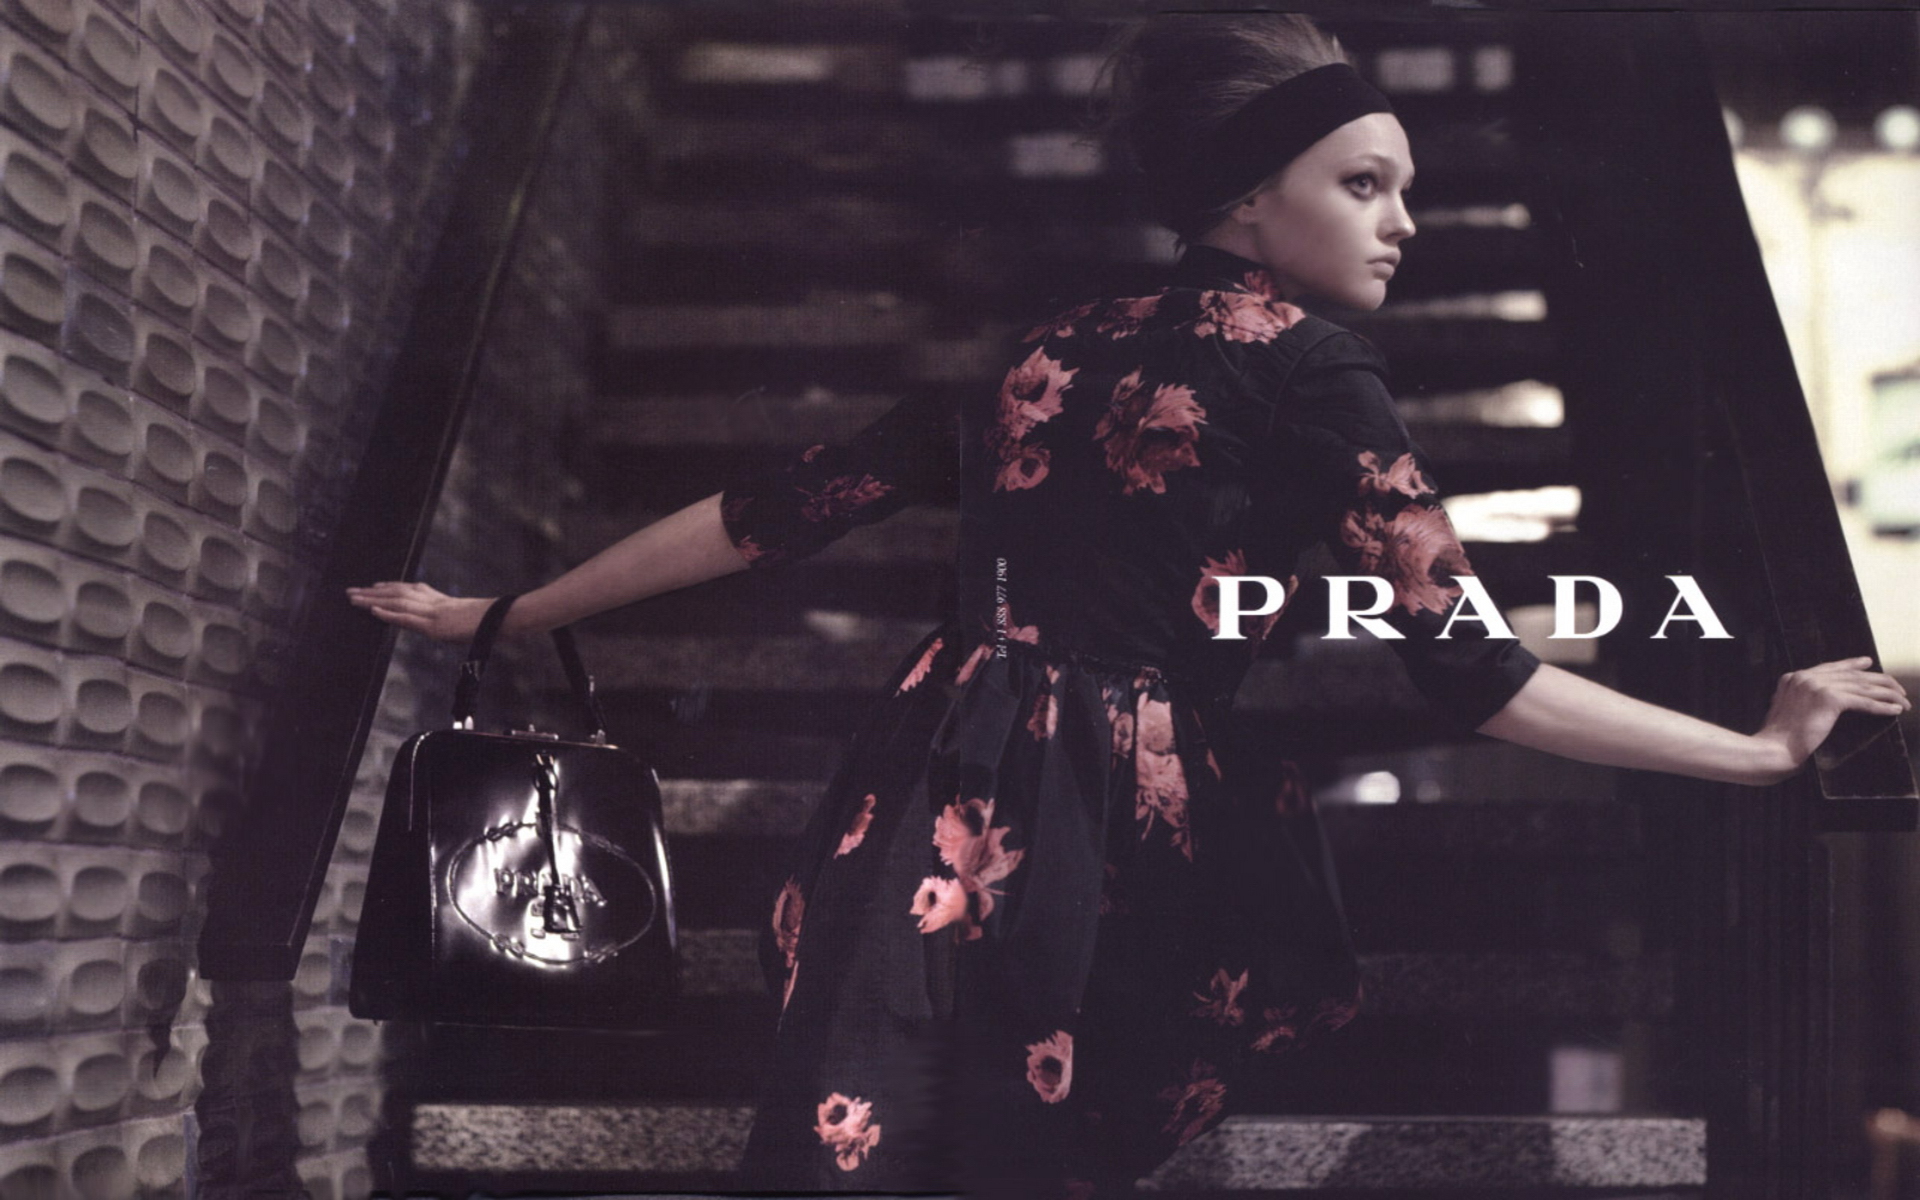 Prada Wallpaper, Prada Wallpaper - Sasha Pivovarova Prada Campaign 2017 - HD Wallpaper 